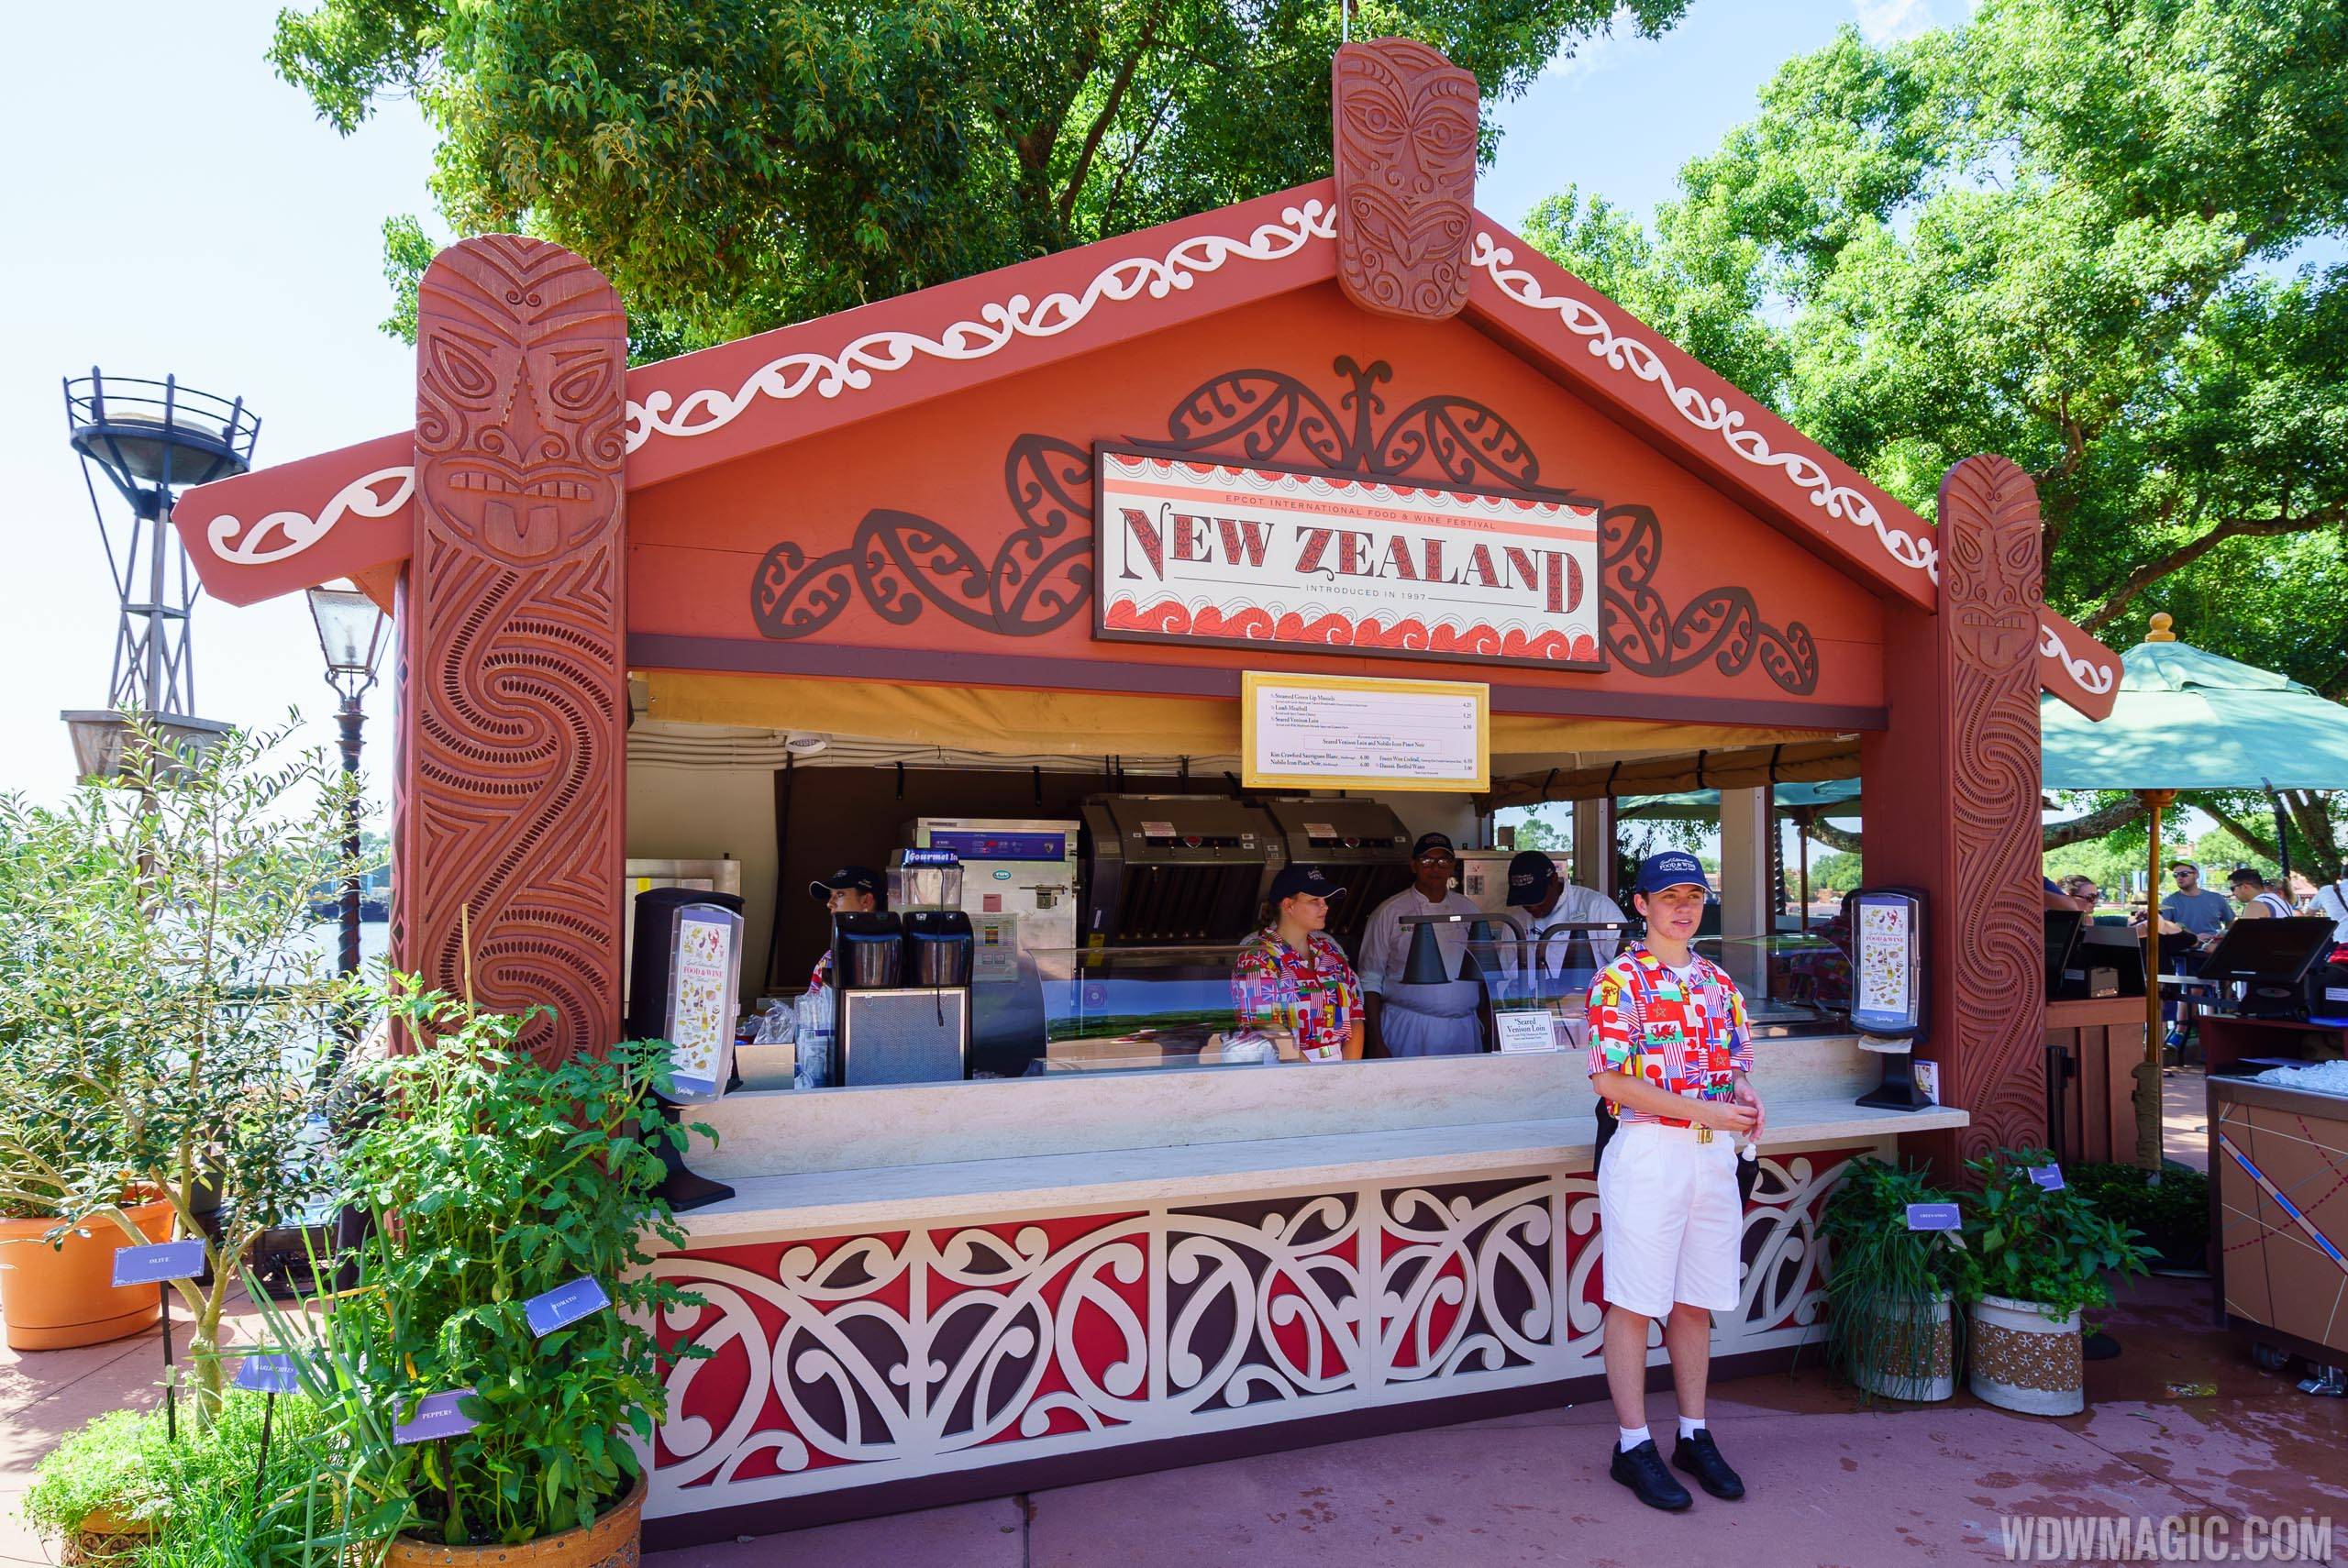 2017 Epcot Food and Wine Festival - New Zealand marketplace kiosk